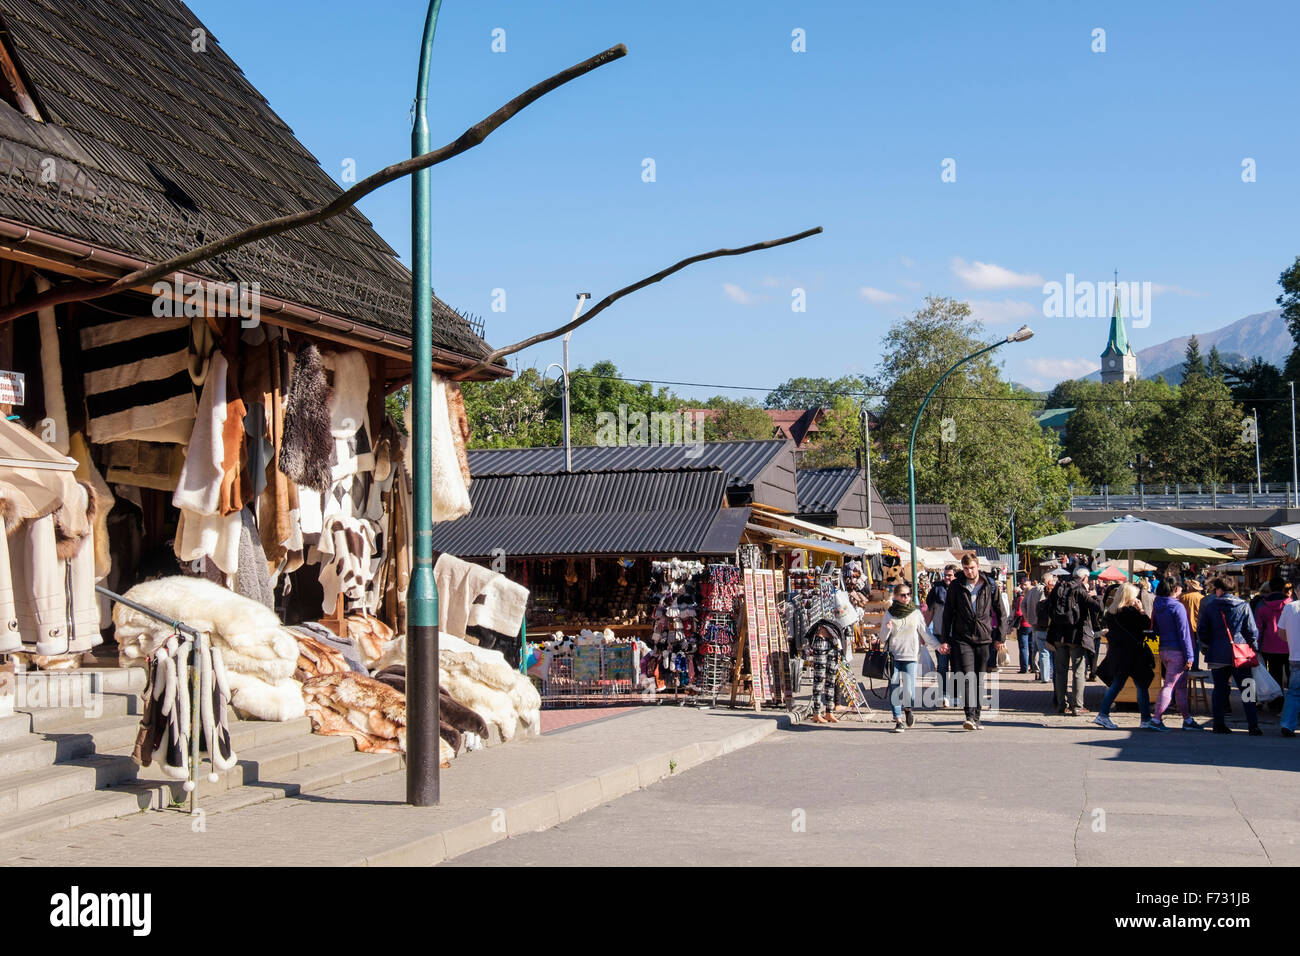 Stalls selling furs and skins in market on busy Krupowki Street, Zakopane, Tatra County, Poland, Europe Stock Photo